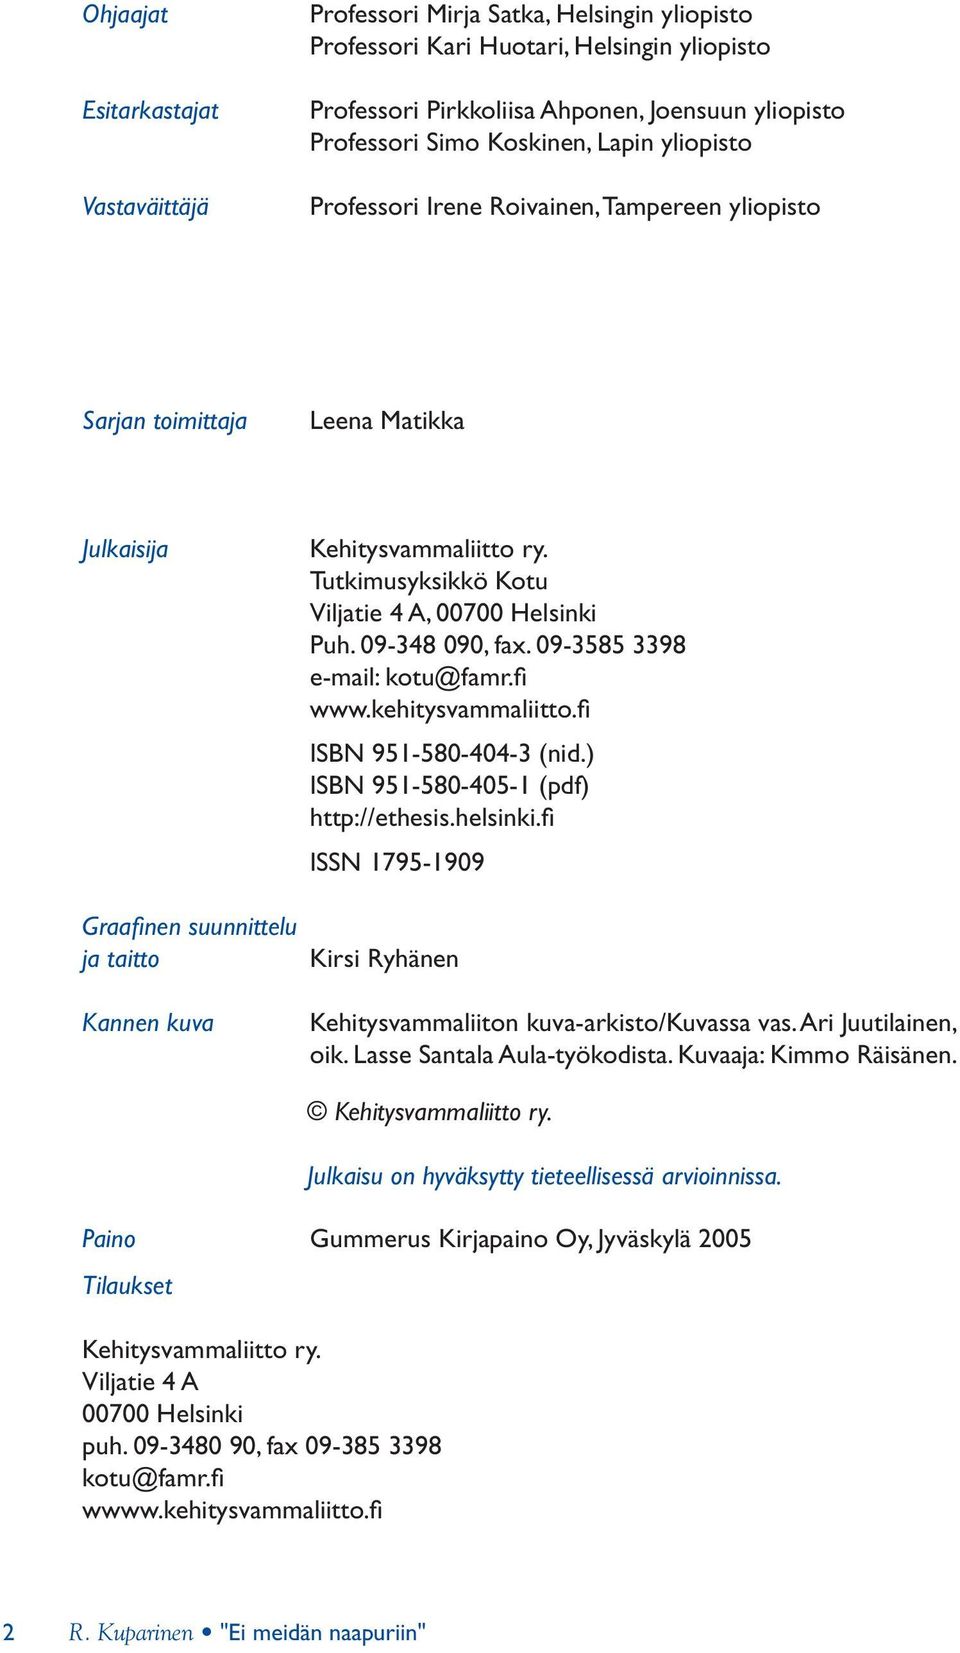 Tutkimusyksikkö Kotu Viljatie 4 A, 00700 Helsinki Puh. 09-348 090, fax. 09-3585 3398 e-mail: kotu@famr.fi www.kehitysvammaliitto.fi ISBN 951-580-404-3 (nid.) ISBN 951-580-405-1 (pdf) http://ethesis.